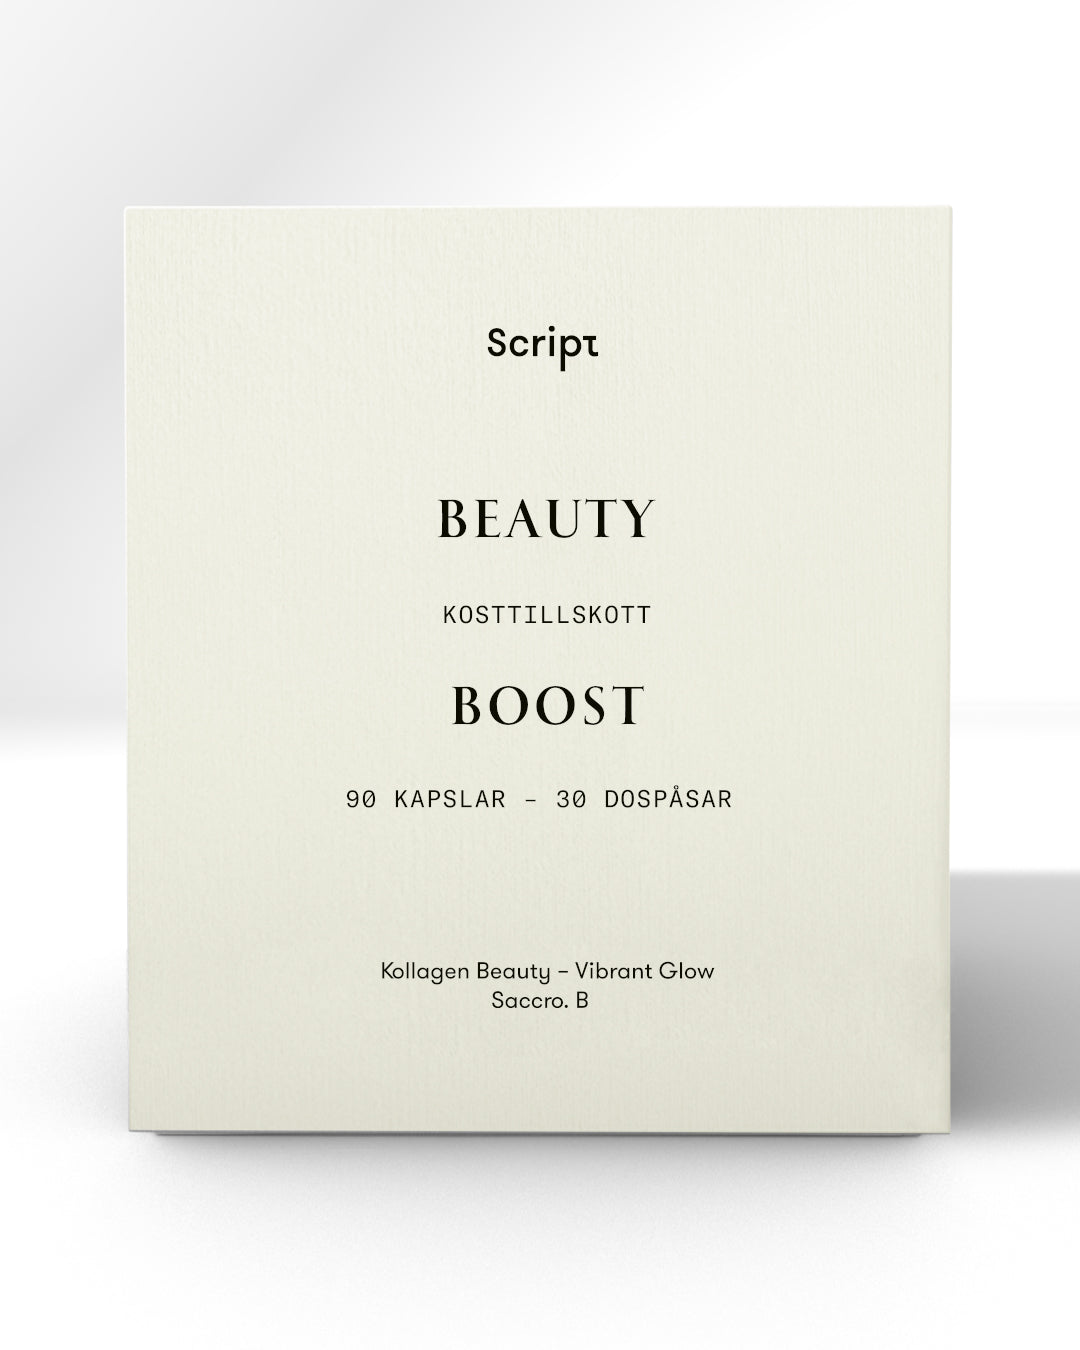 Beauty Boost kit - 30 dospåsar